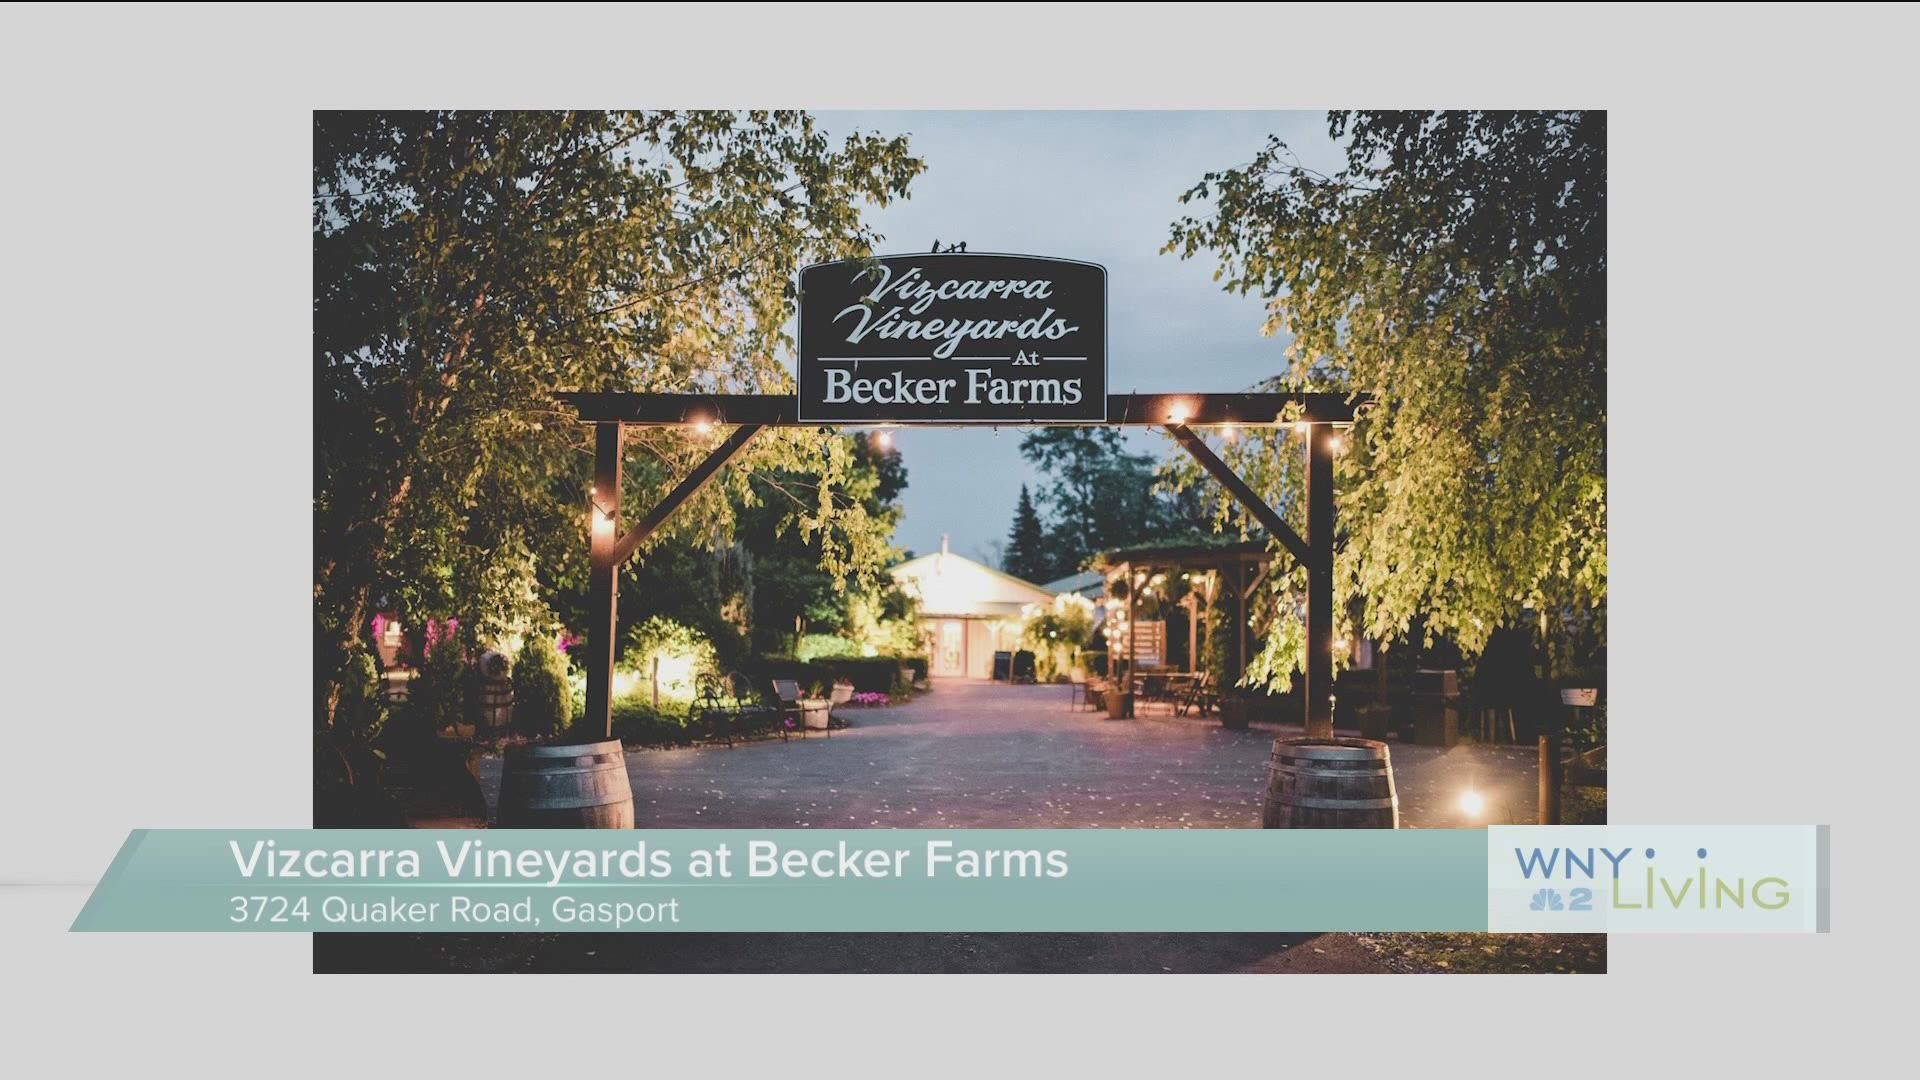 January 21s - Vizcarra Vineyards at Becker Farms -THIS VIDEO IS SPONSORED BY VIZCARRA VINEYARDS AT BECKER FARMS